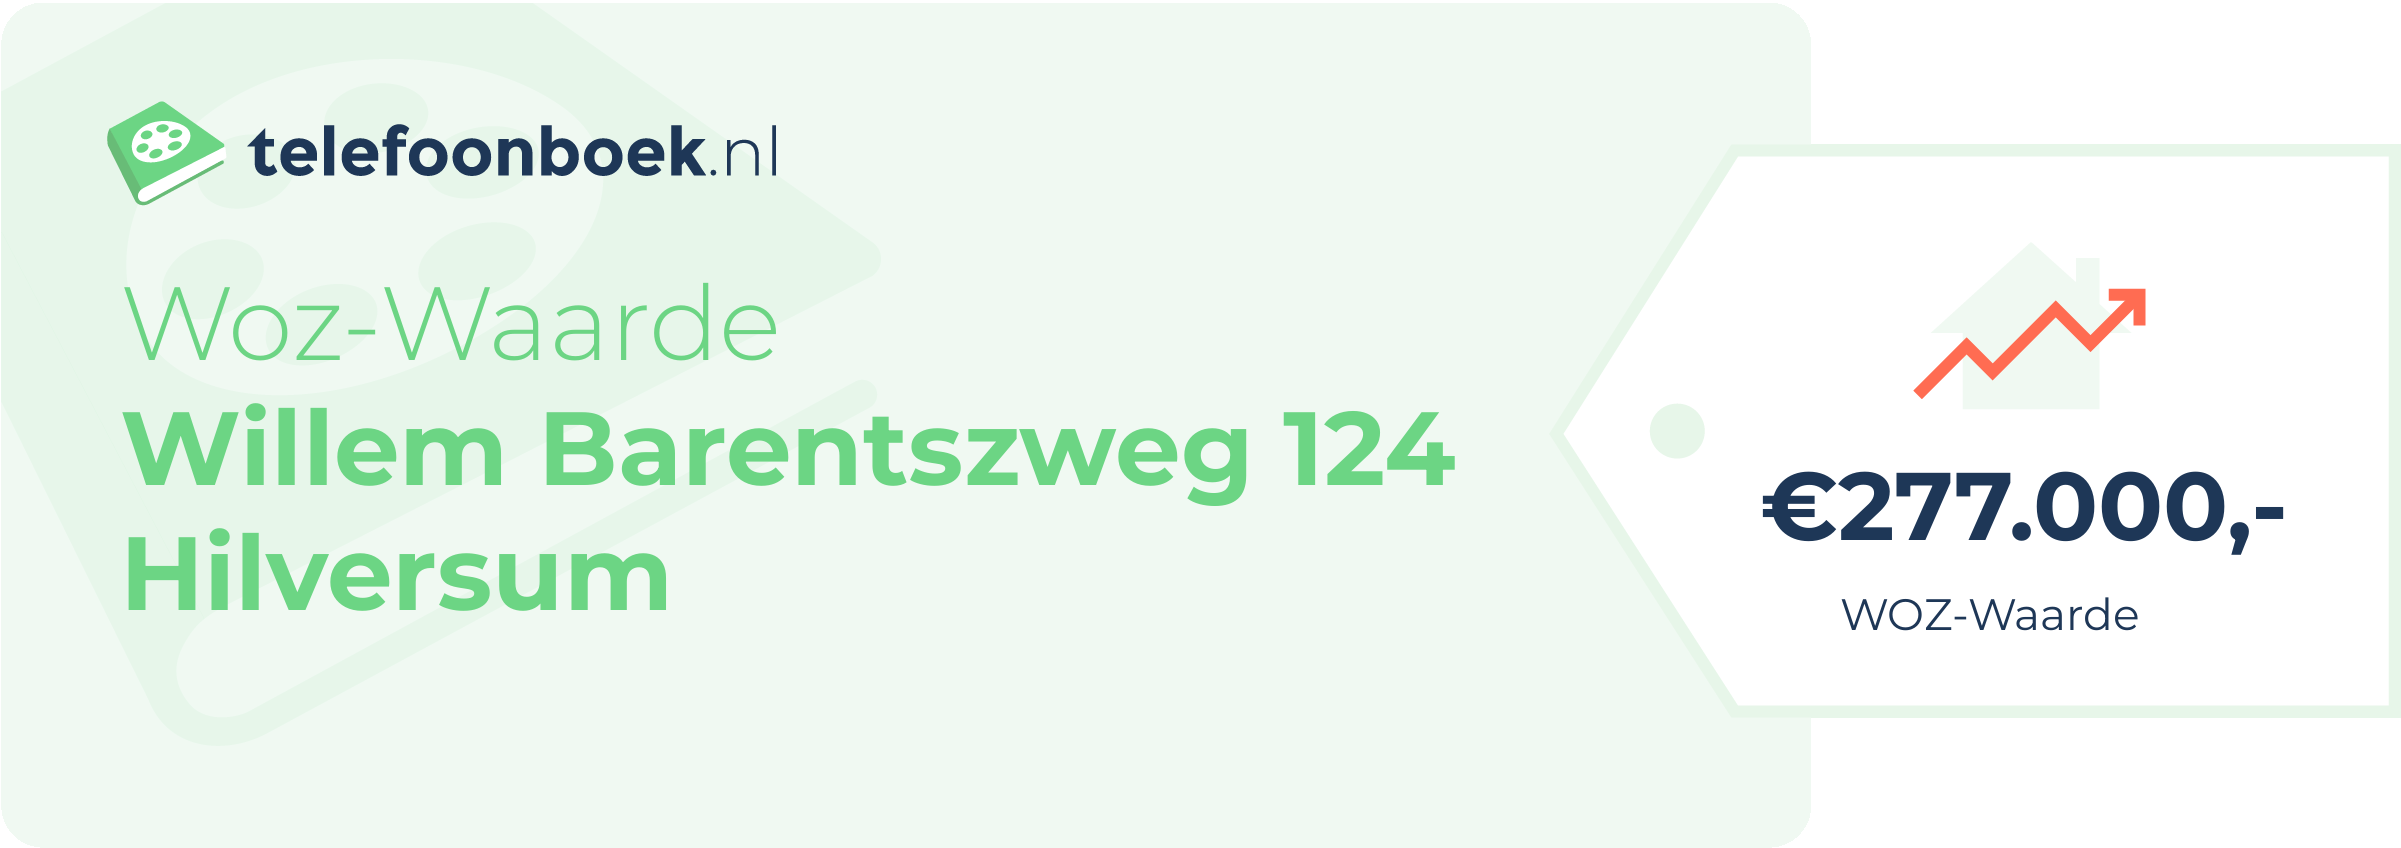 WOZ-waarde Willem Barentszweg 124 Hilversum